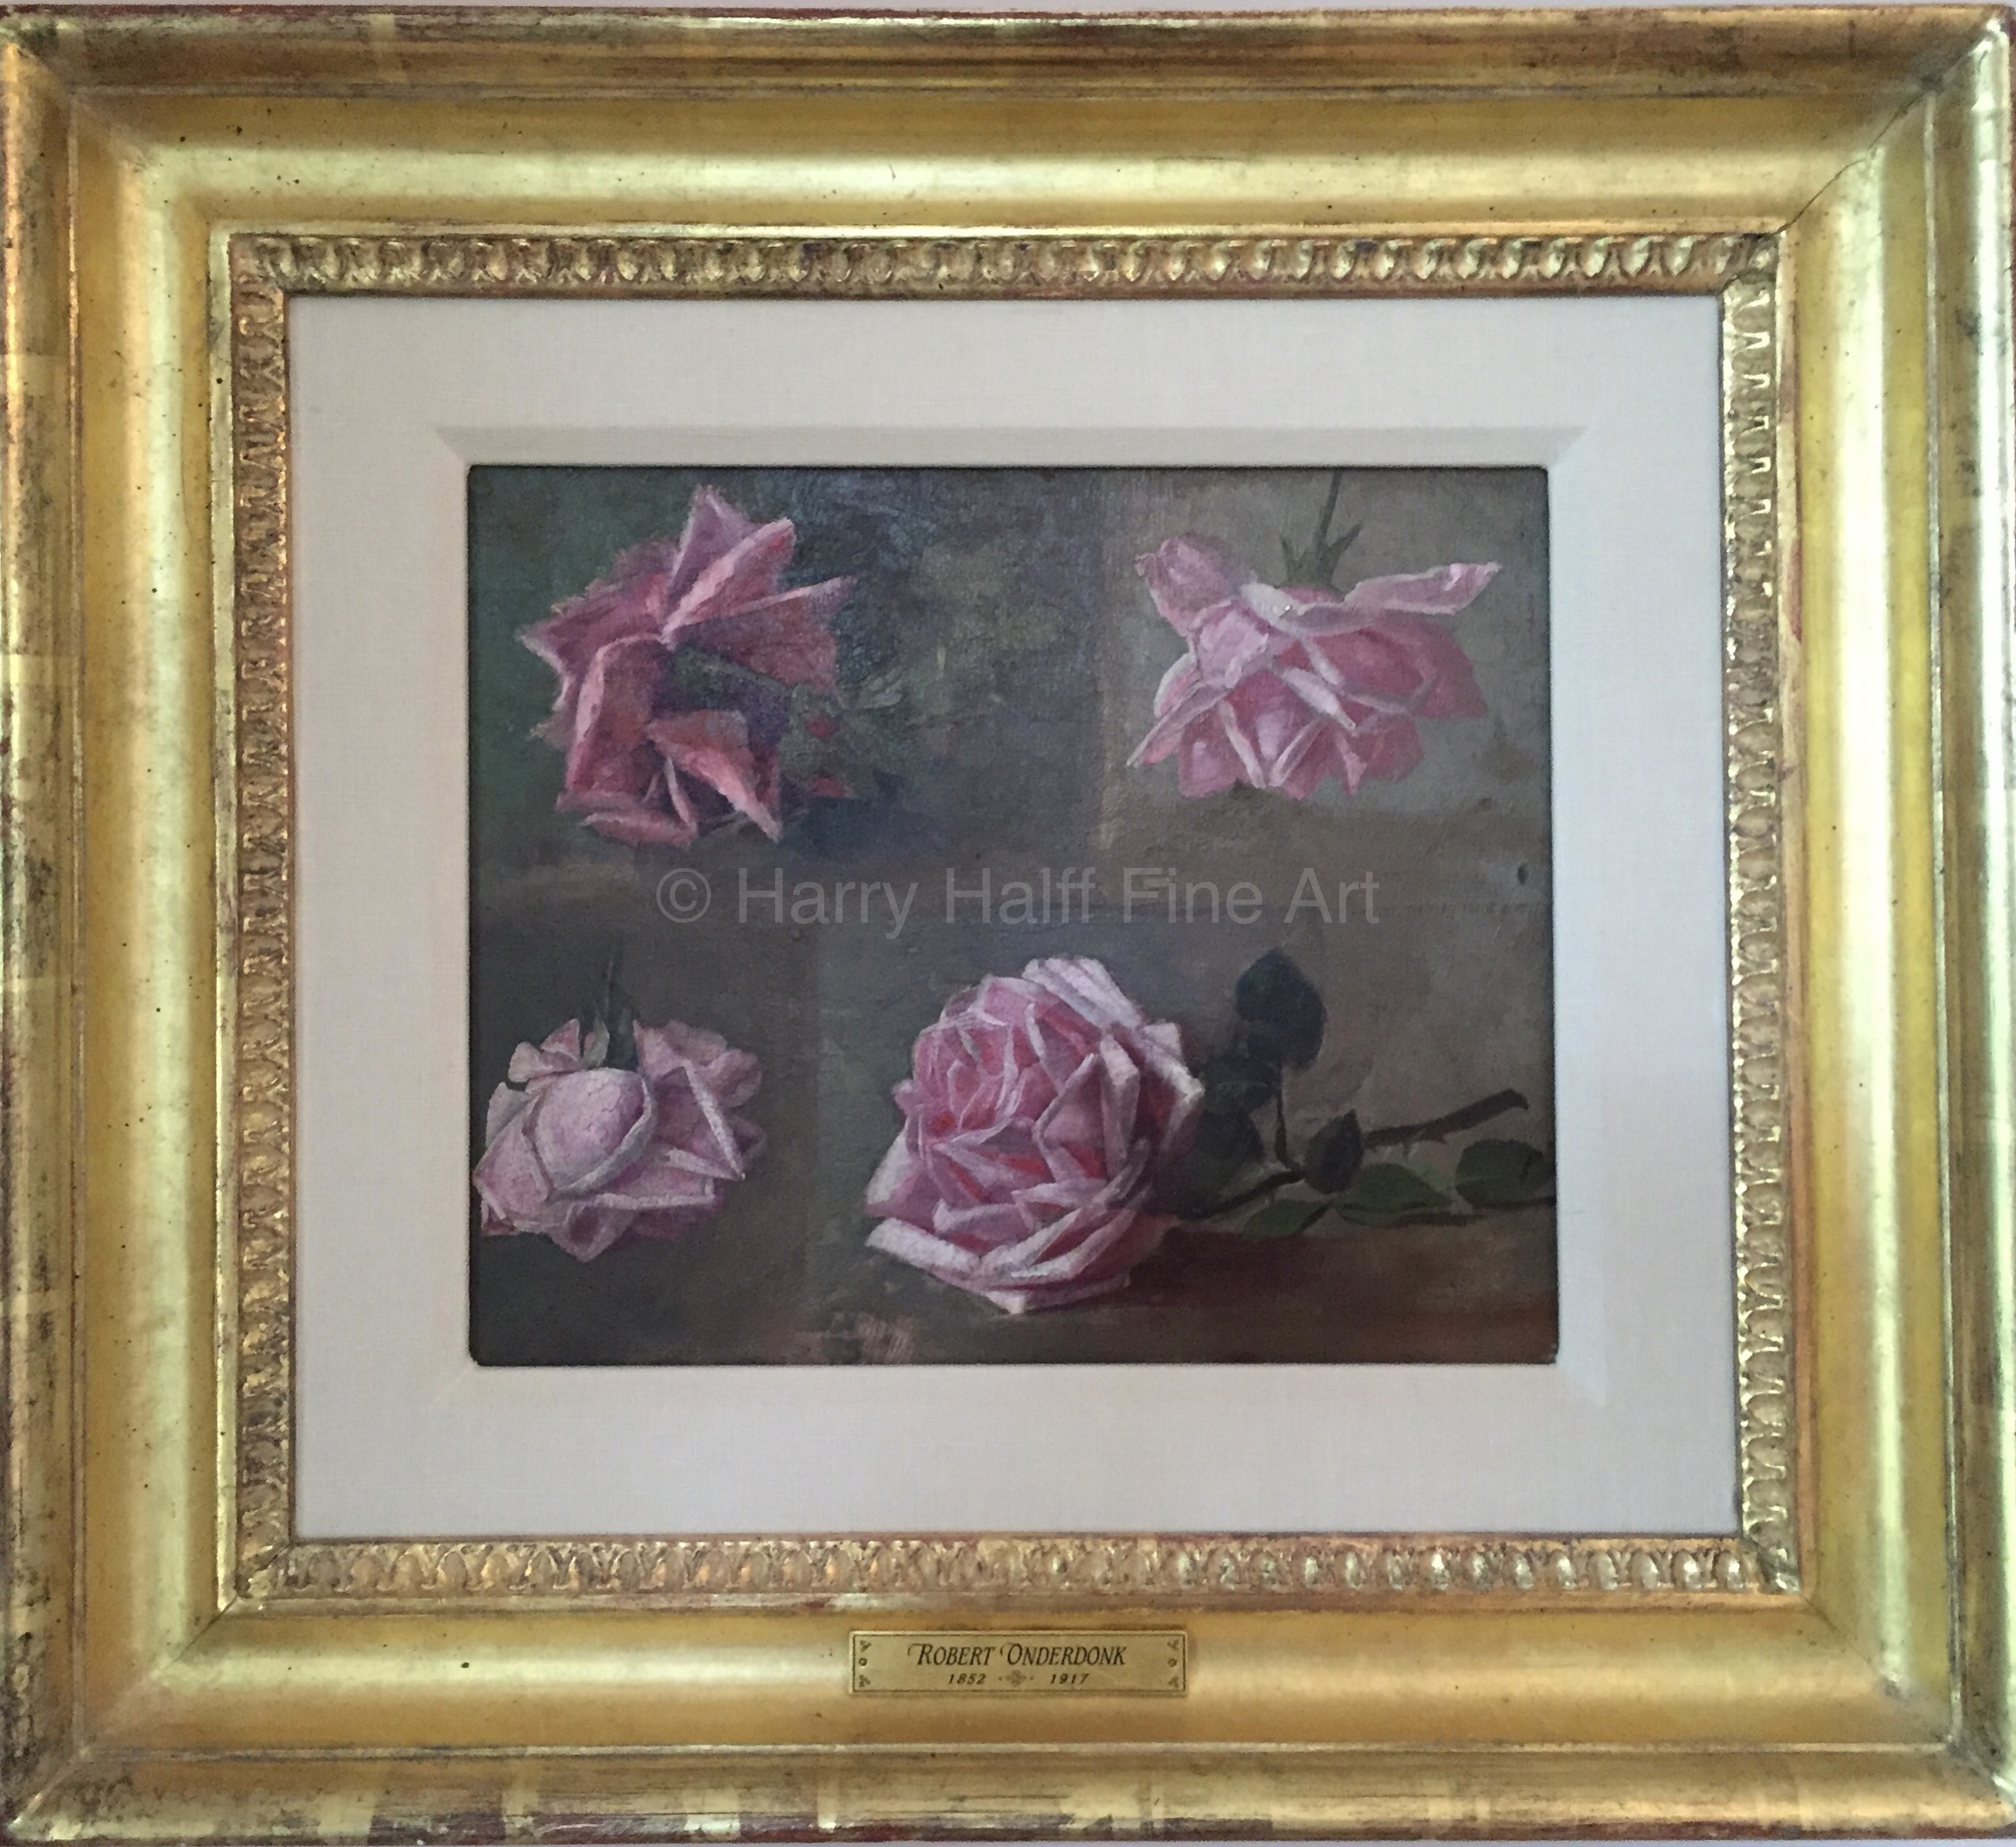 Buy Robert Onderdonk's Small Study of Roses piece